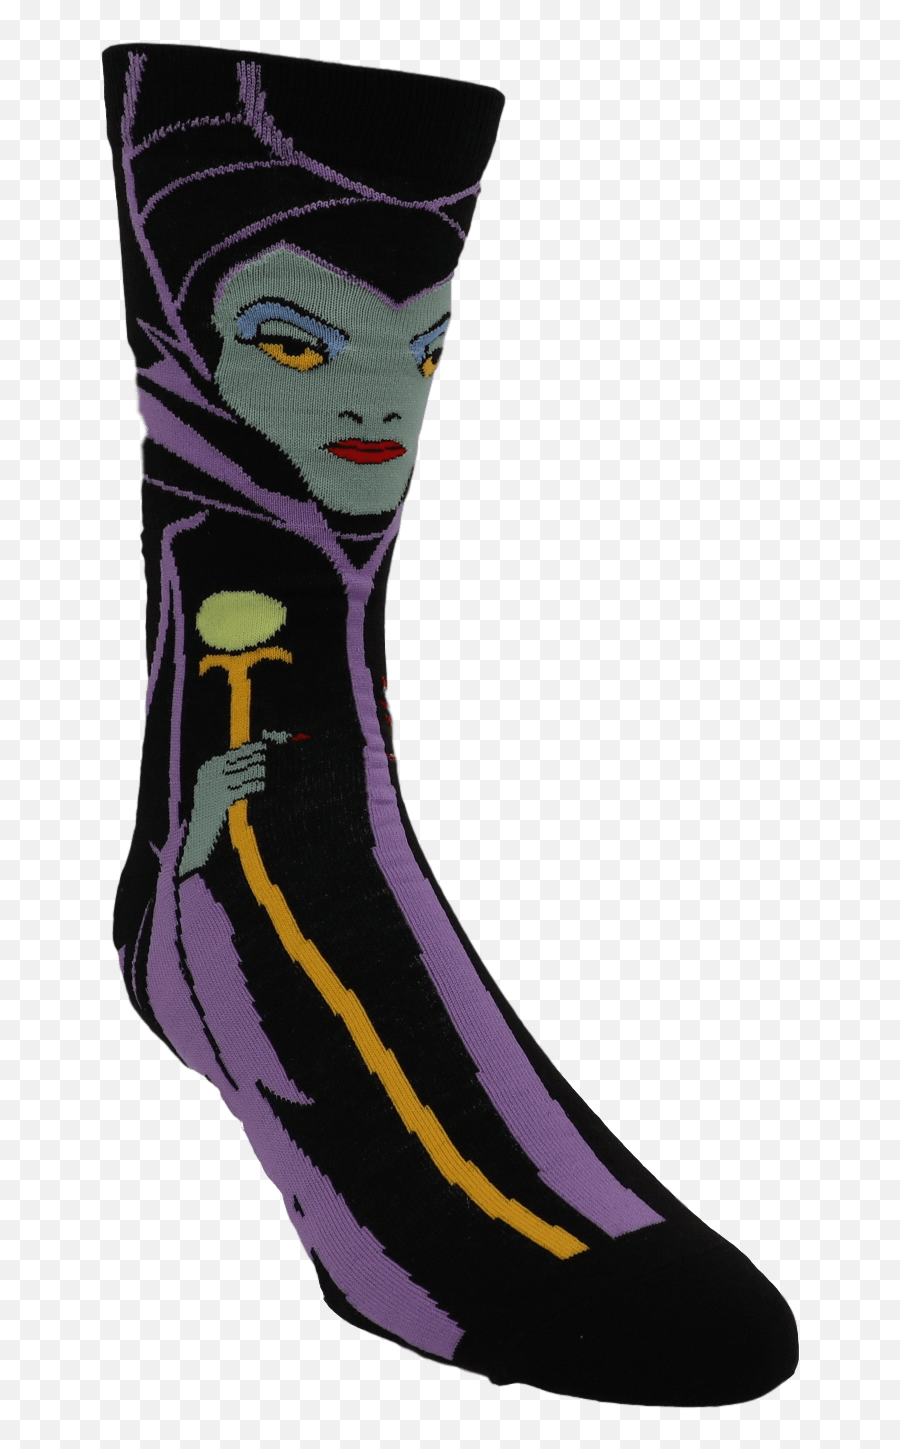 Download Free Png Disney Villain Maleficent 360 Socks - Disney Villains Socks,Maleficent Png